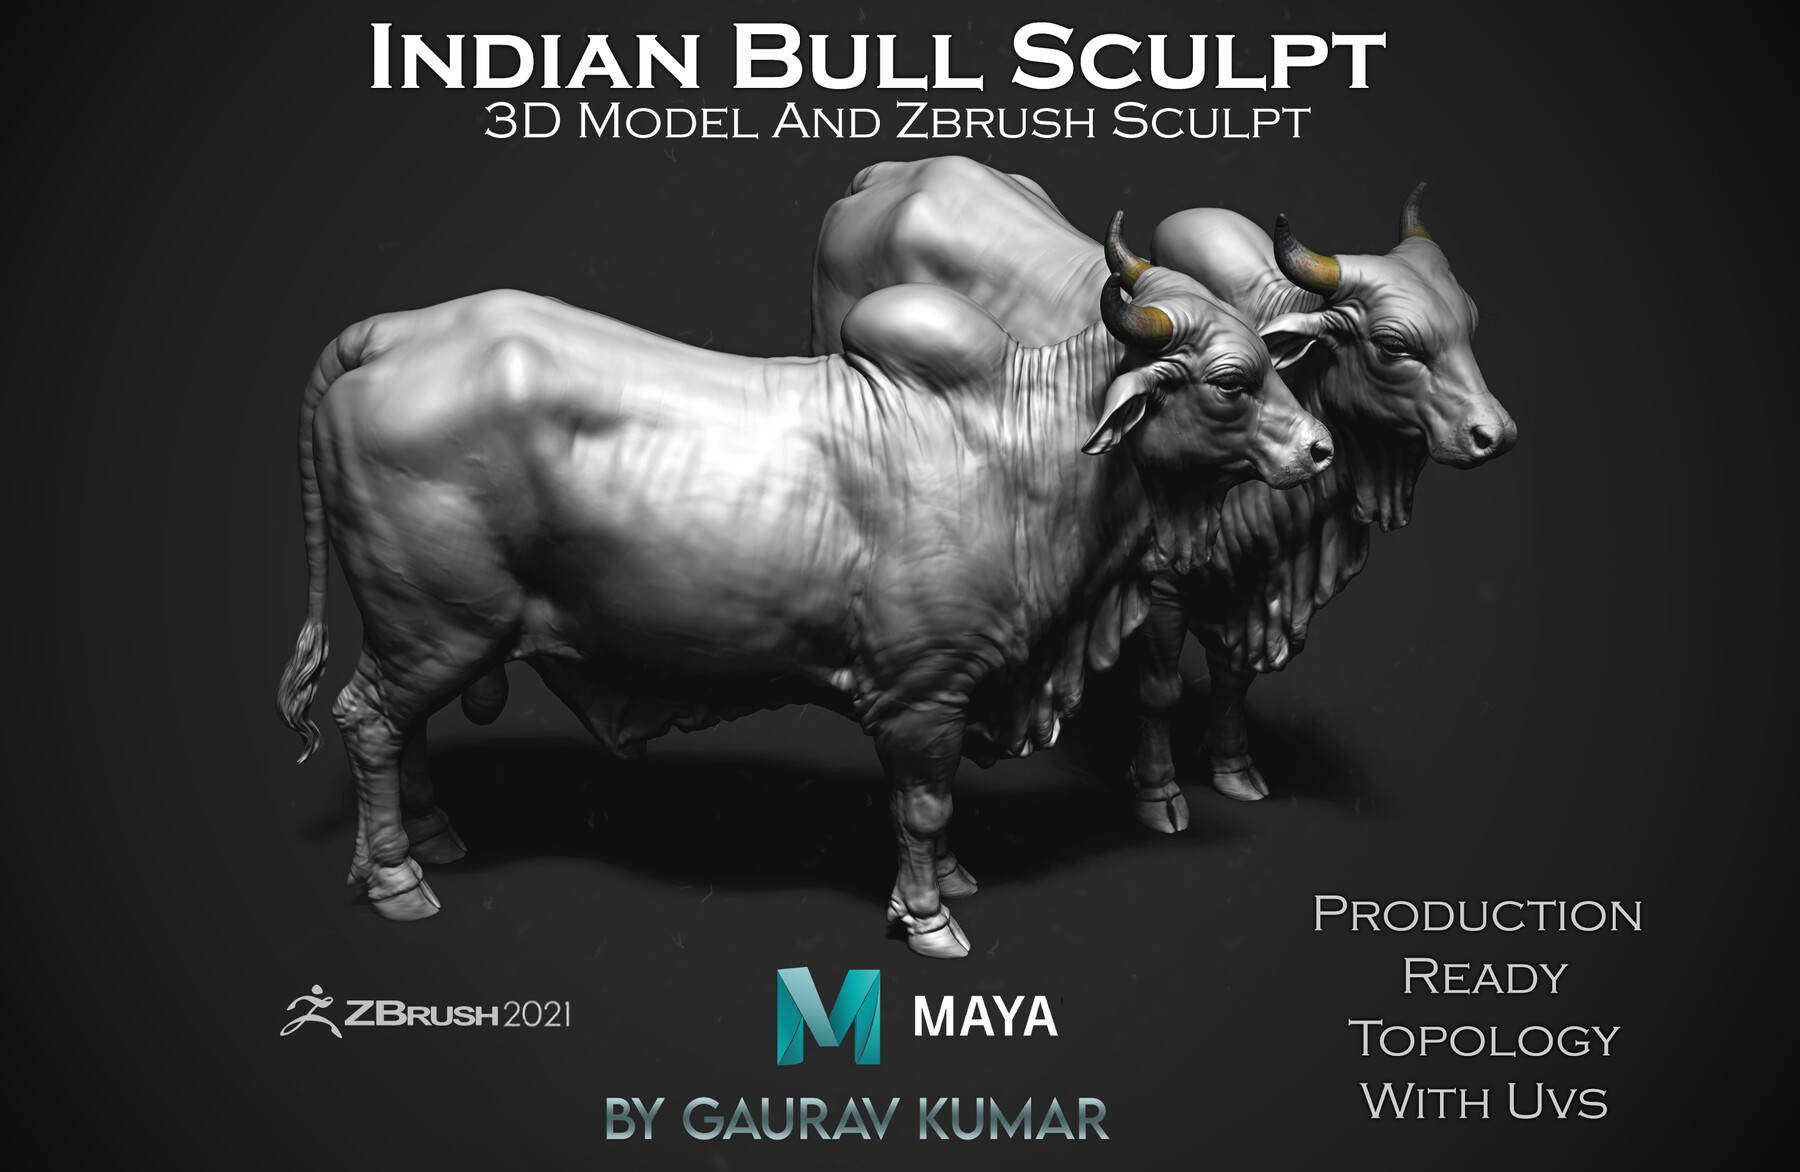 Gaurav Kumar Production Quality Bull 3d Model And Zbrush Sculpt